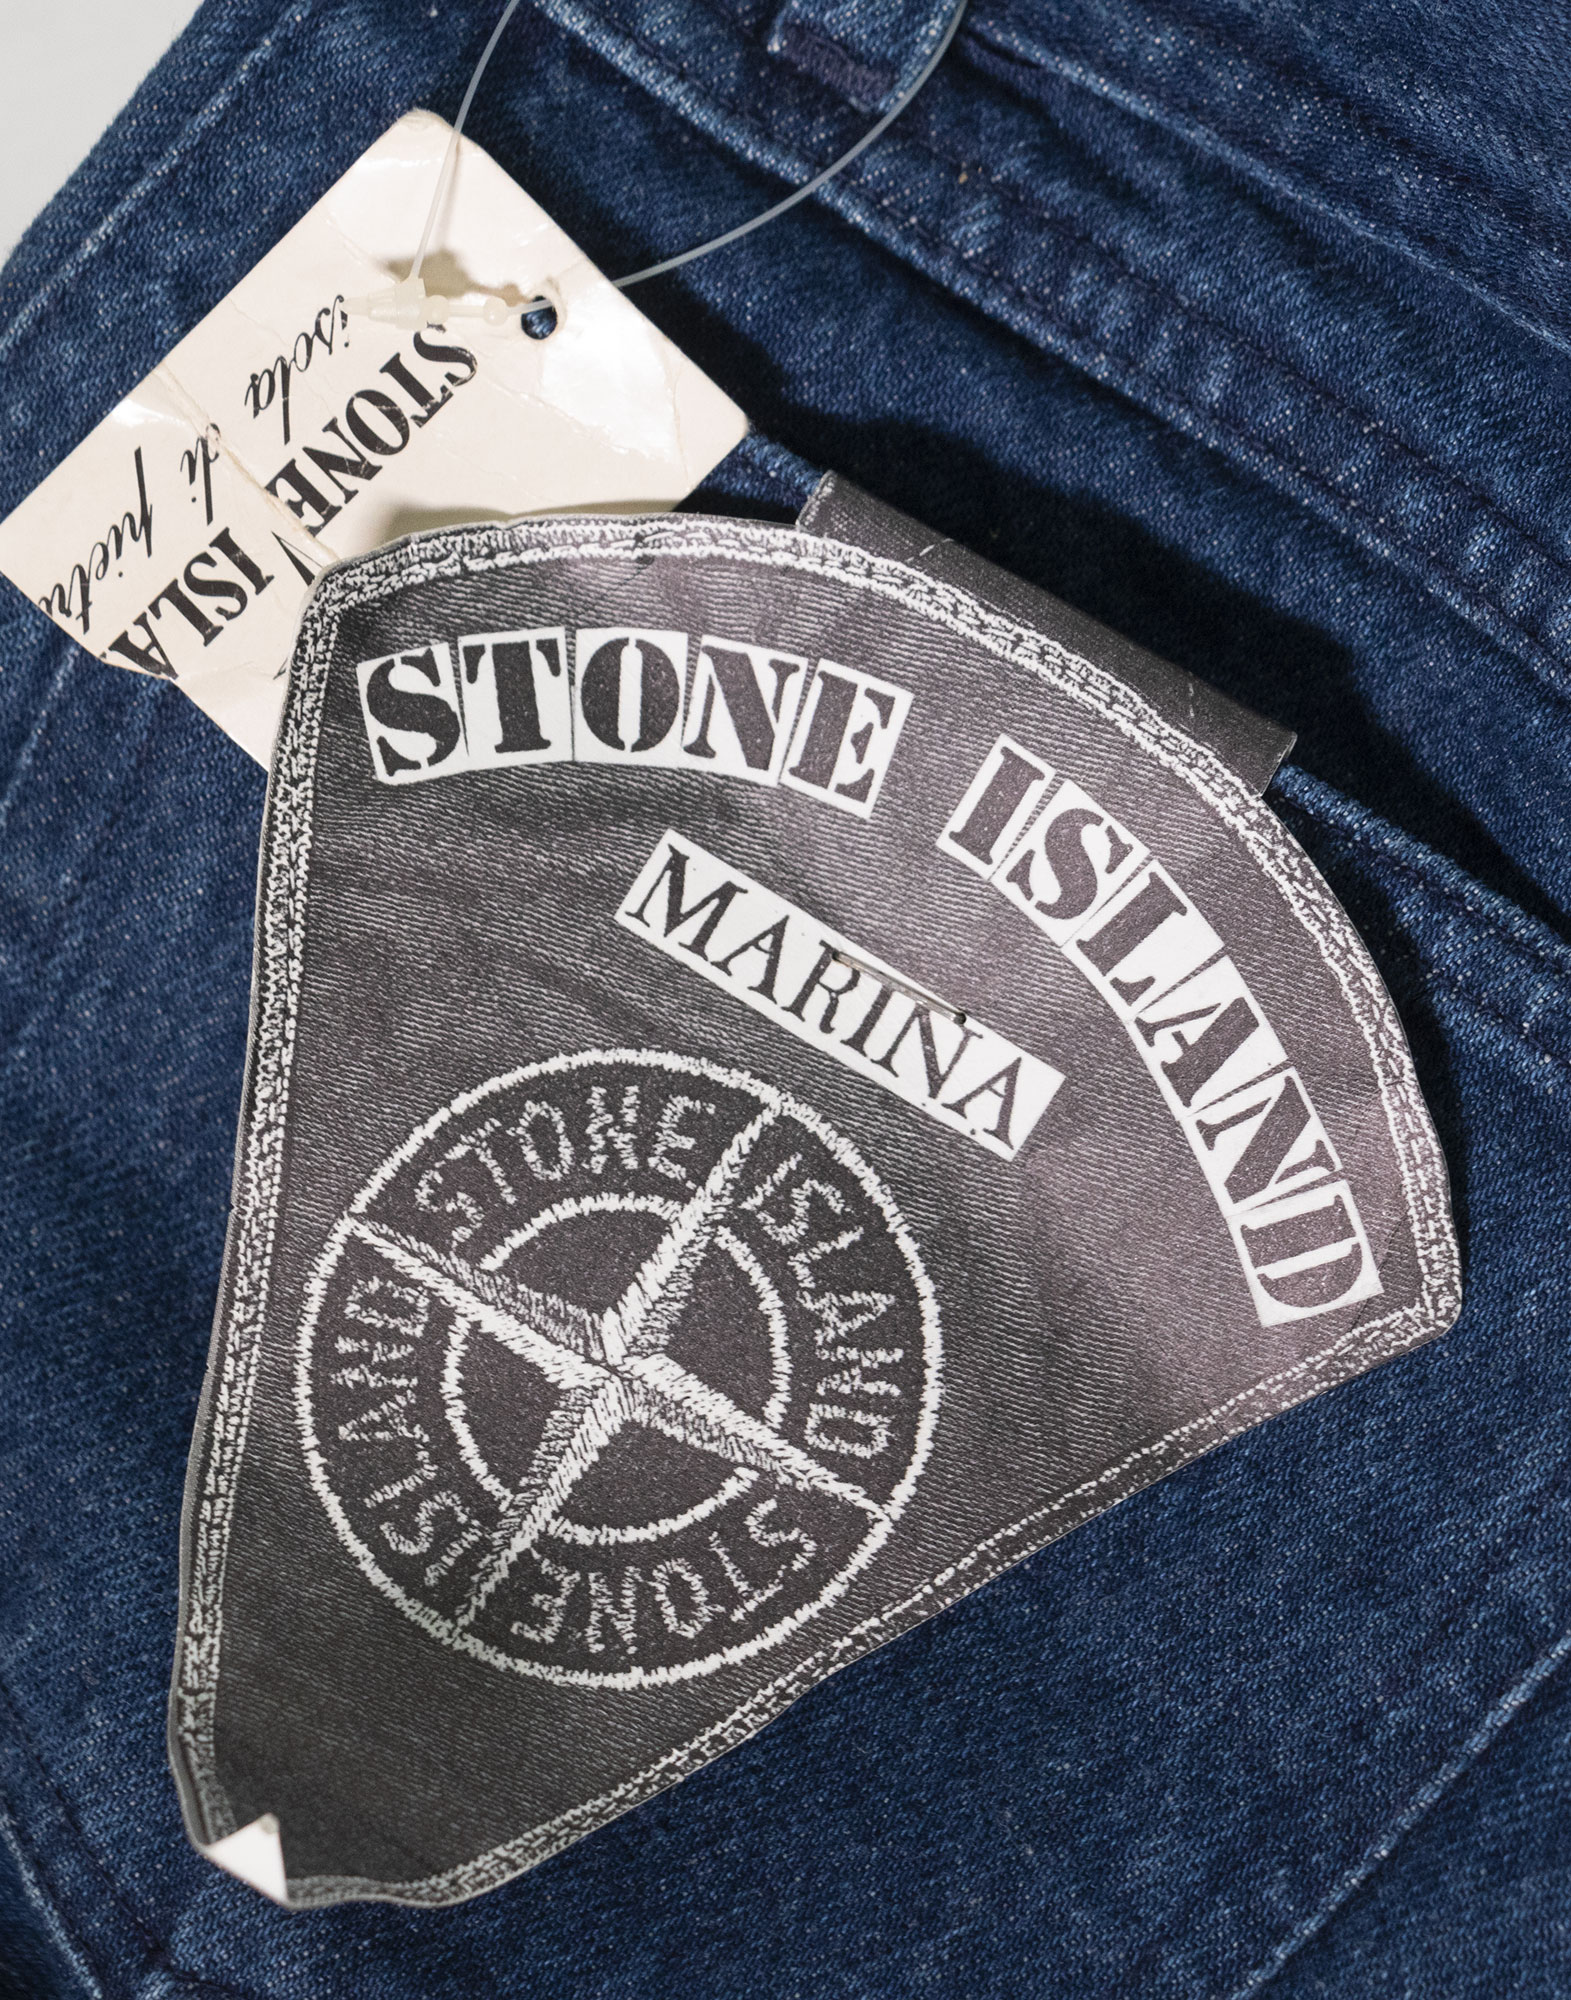 Stone Island - Pantaloni vintage da donna in denim